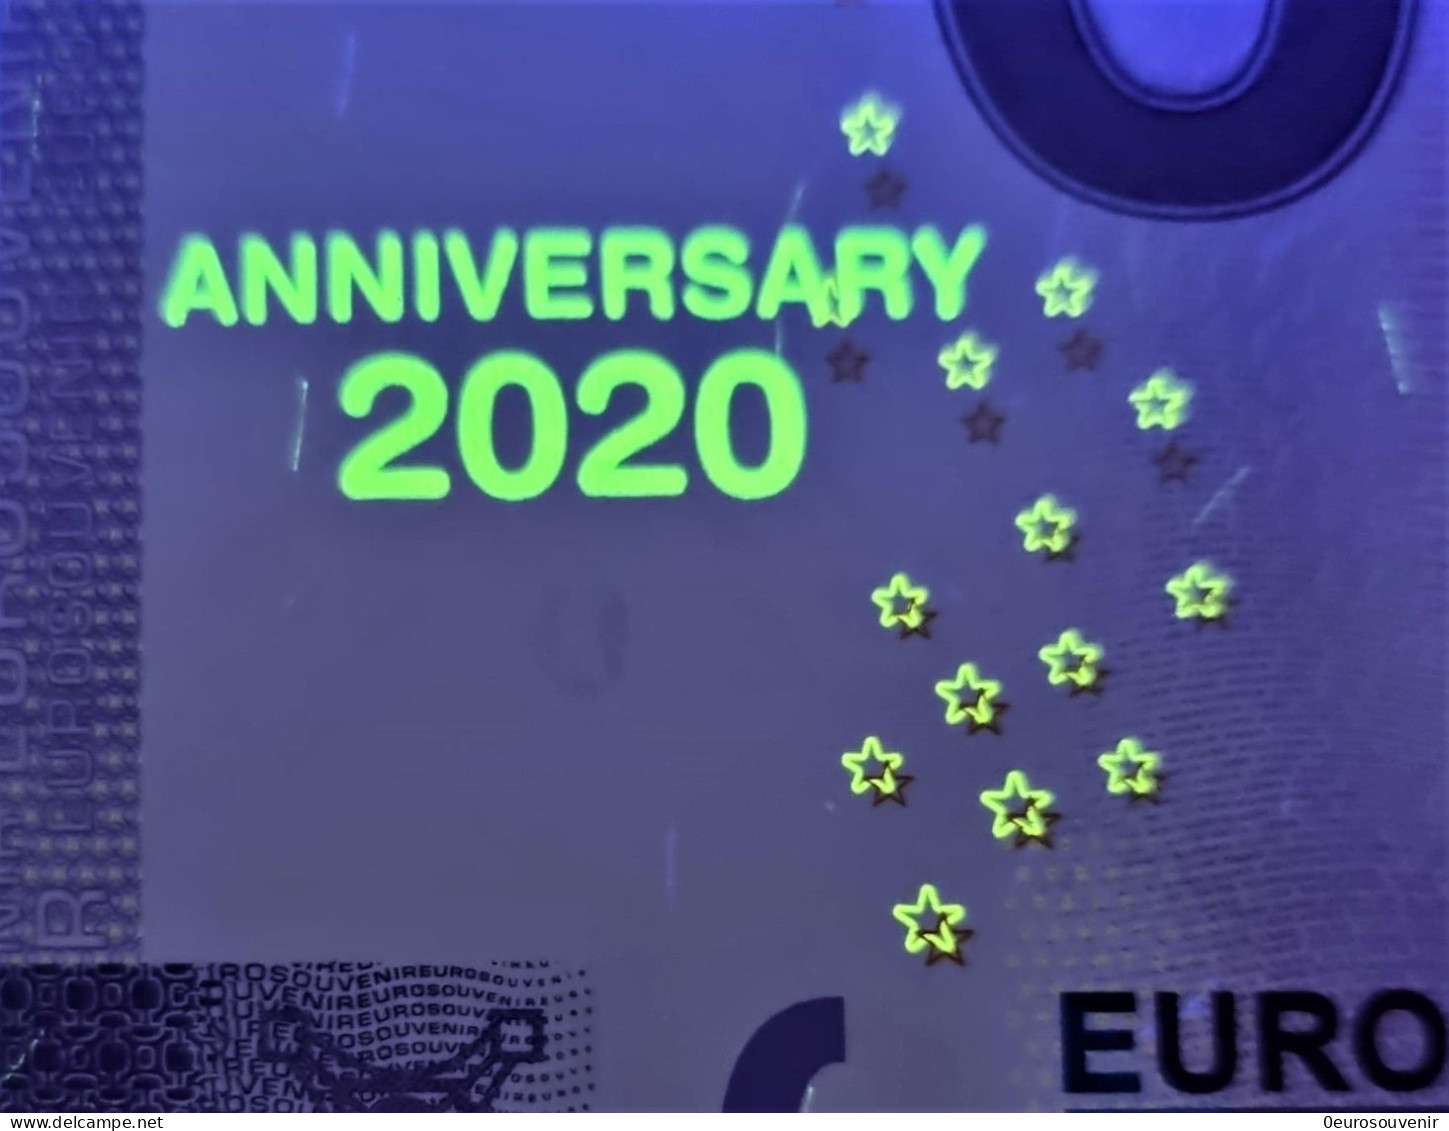 0-Euro XEGH 2020-2 HANSESTADT HATTINGEN / RUHR ALTES RATHAUS Set NORMAL+ANNIVERSARY - Private Proofs / Unofficial